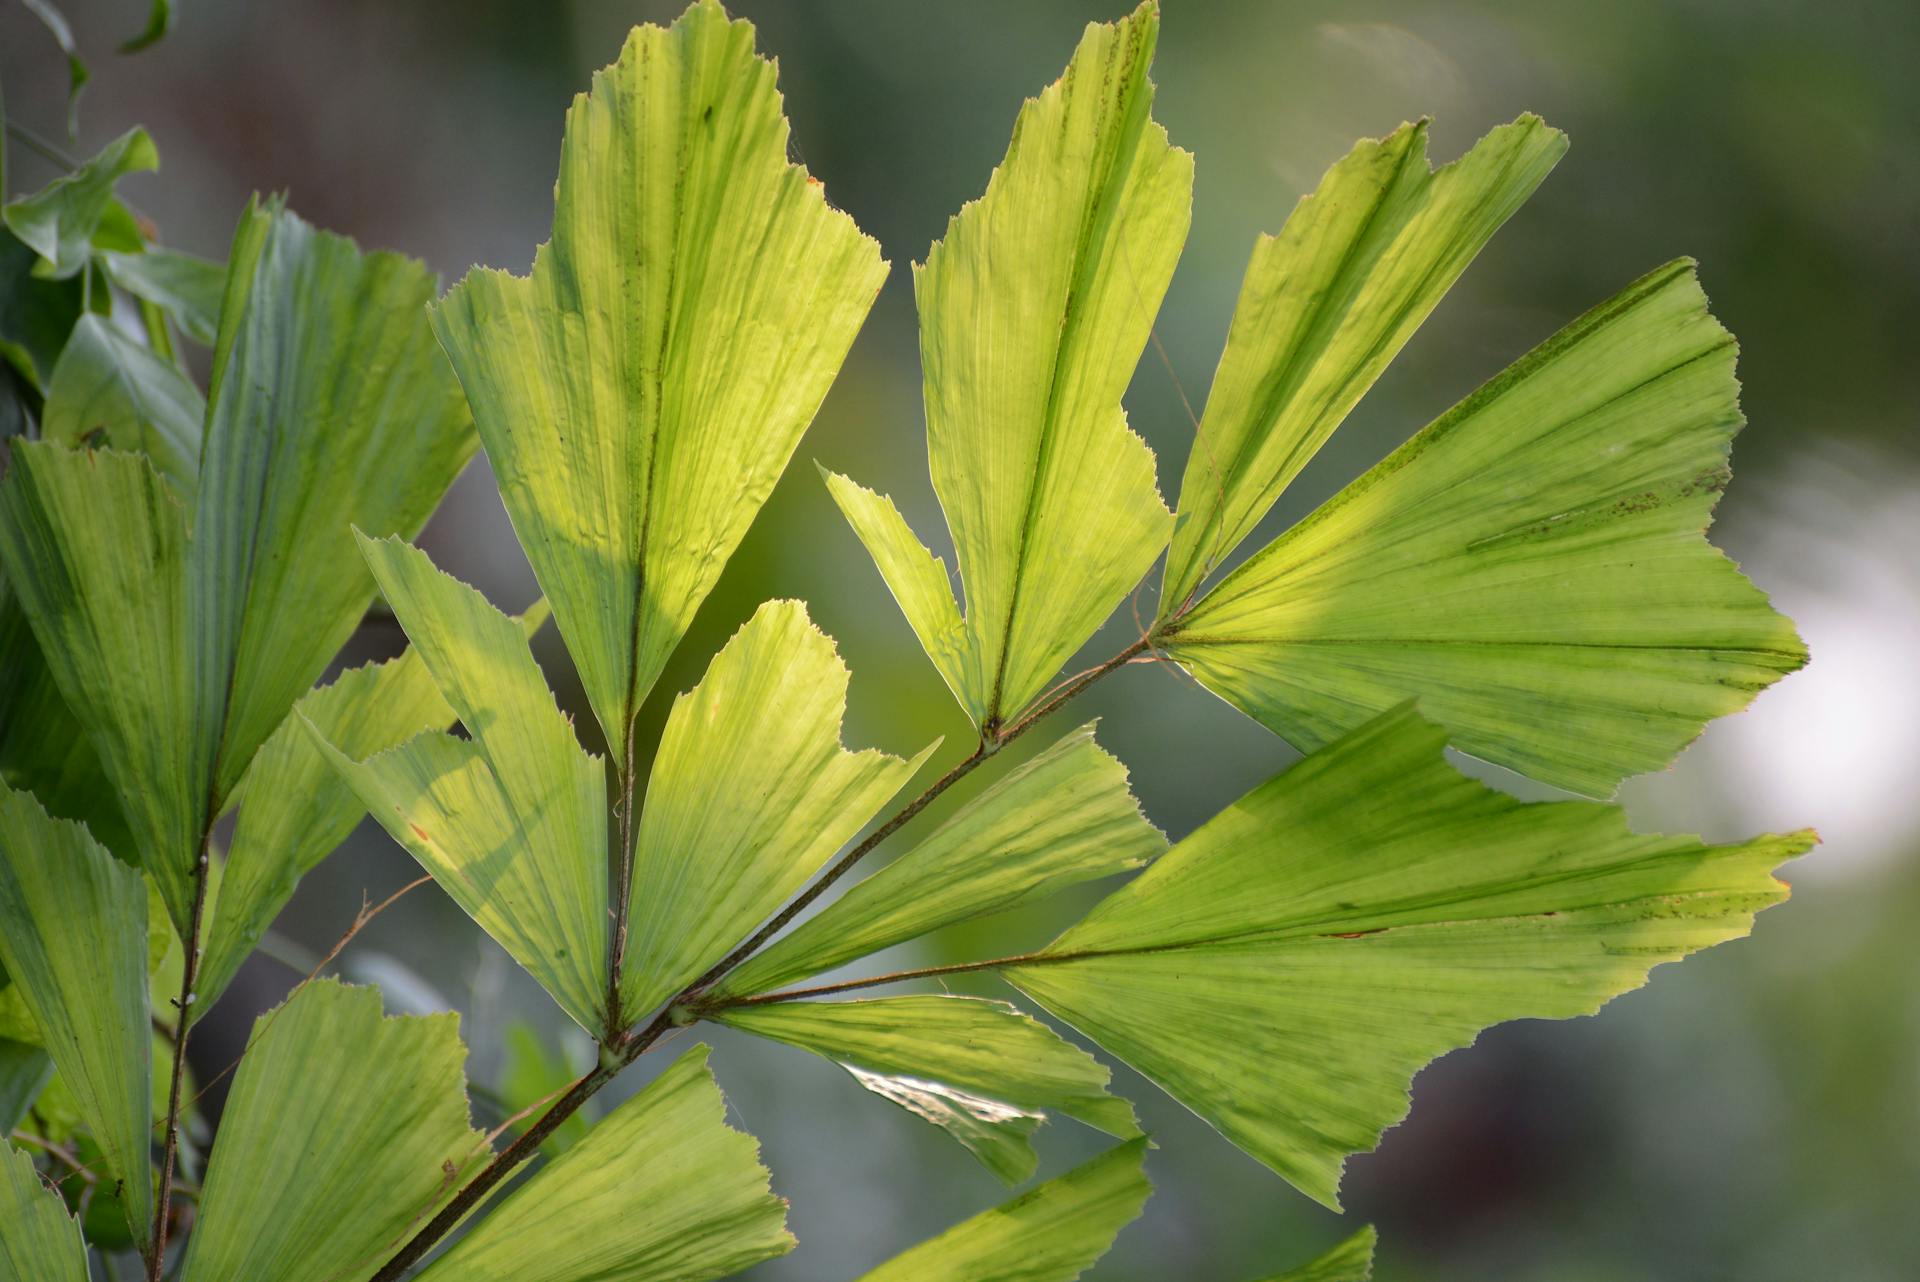 Caryota leaves